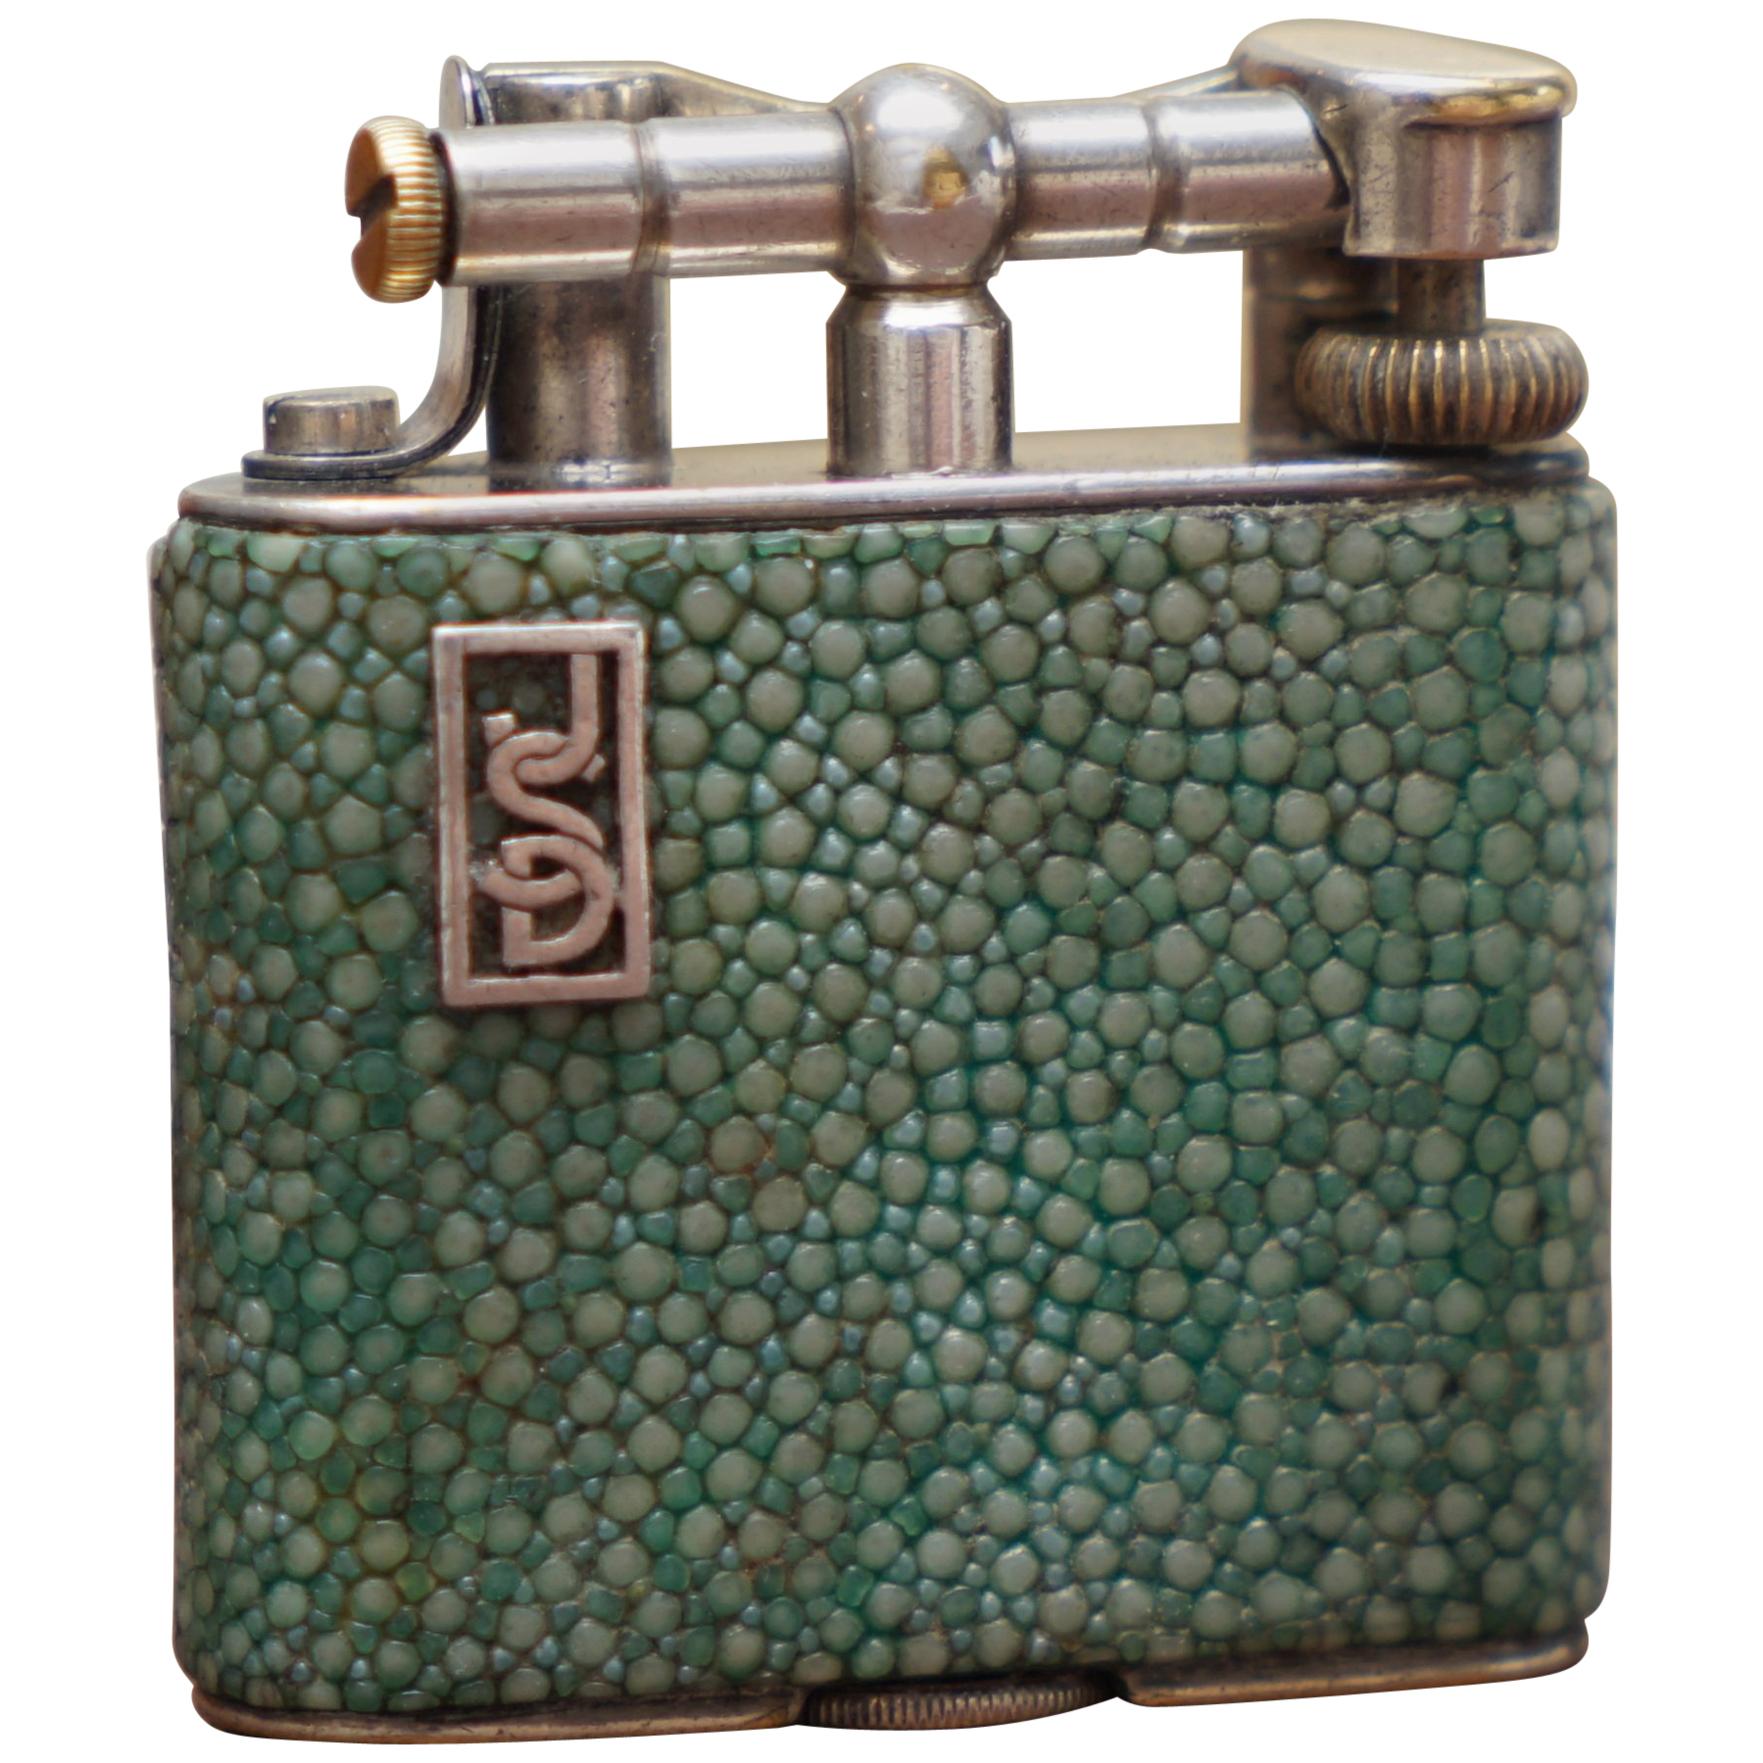 Rare 1930s Dunhill Shagreen Lighter Pat No 390107 Made in England Art Deco Era